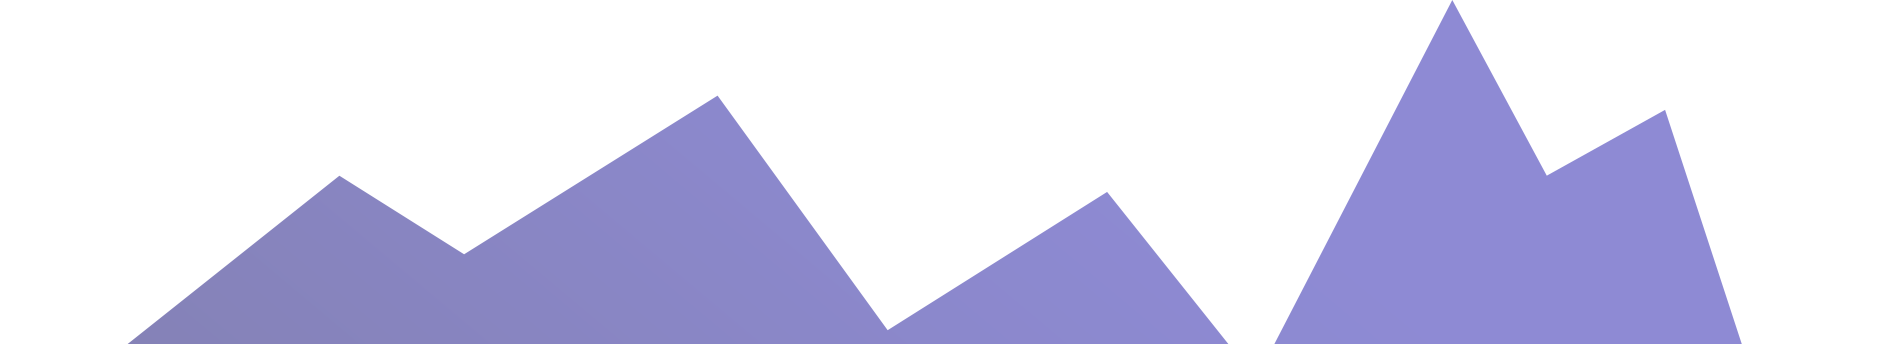 banner polygon